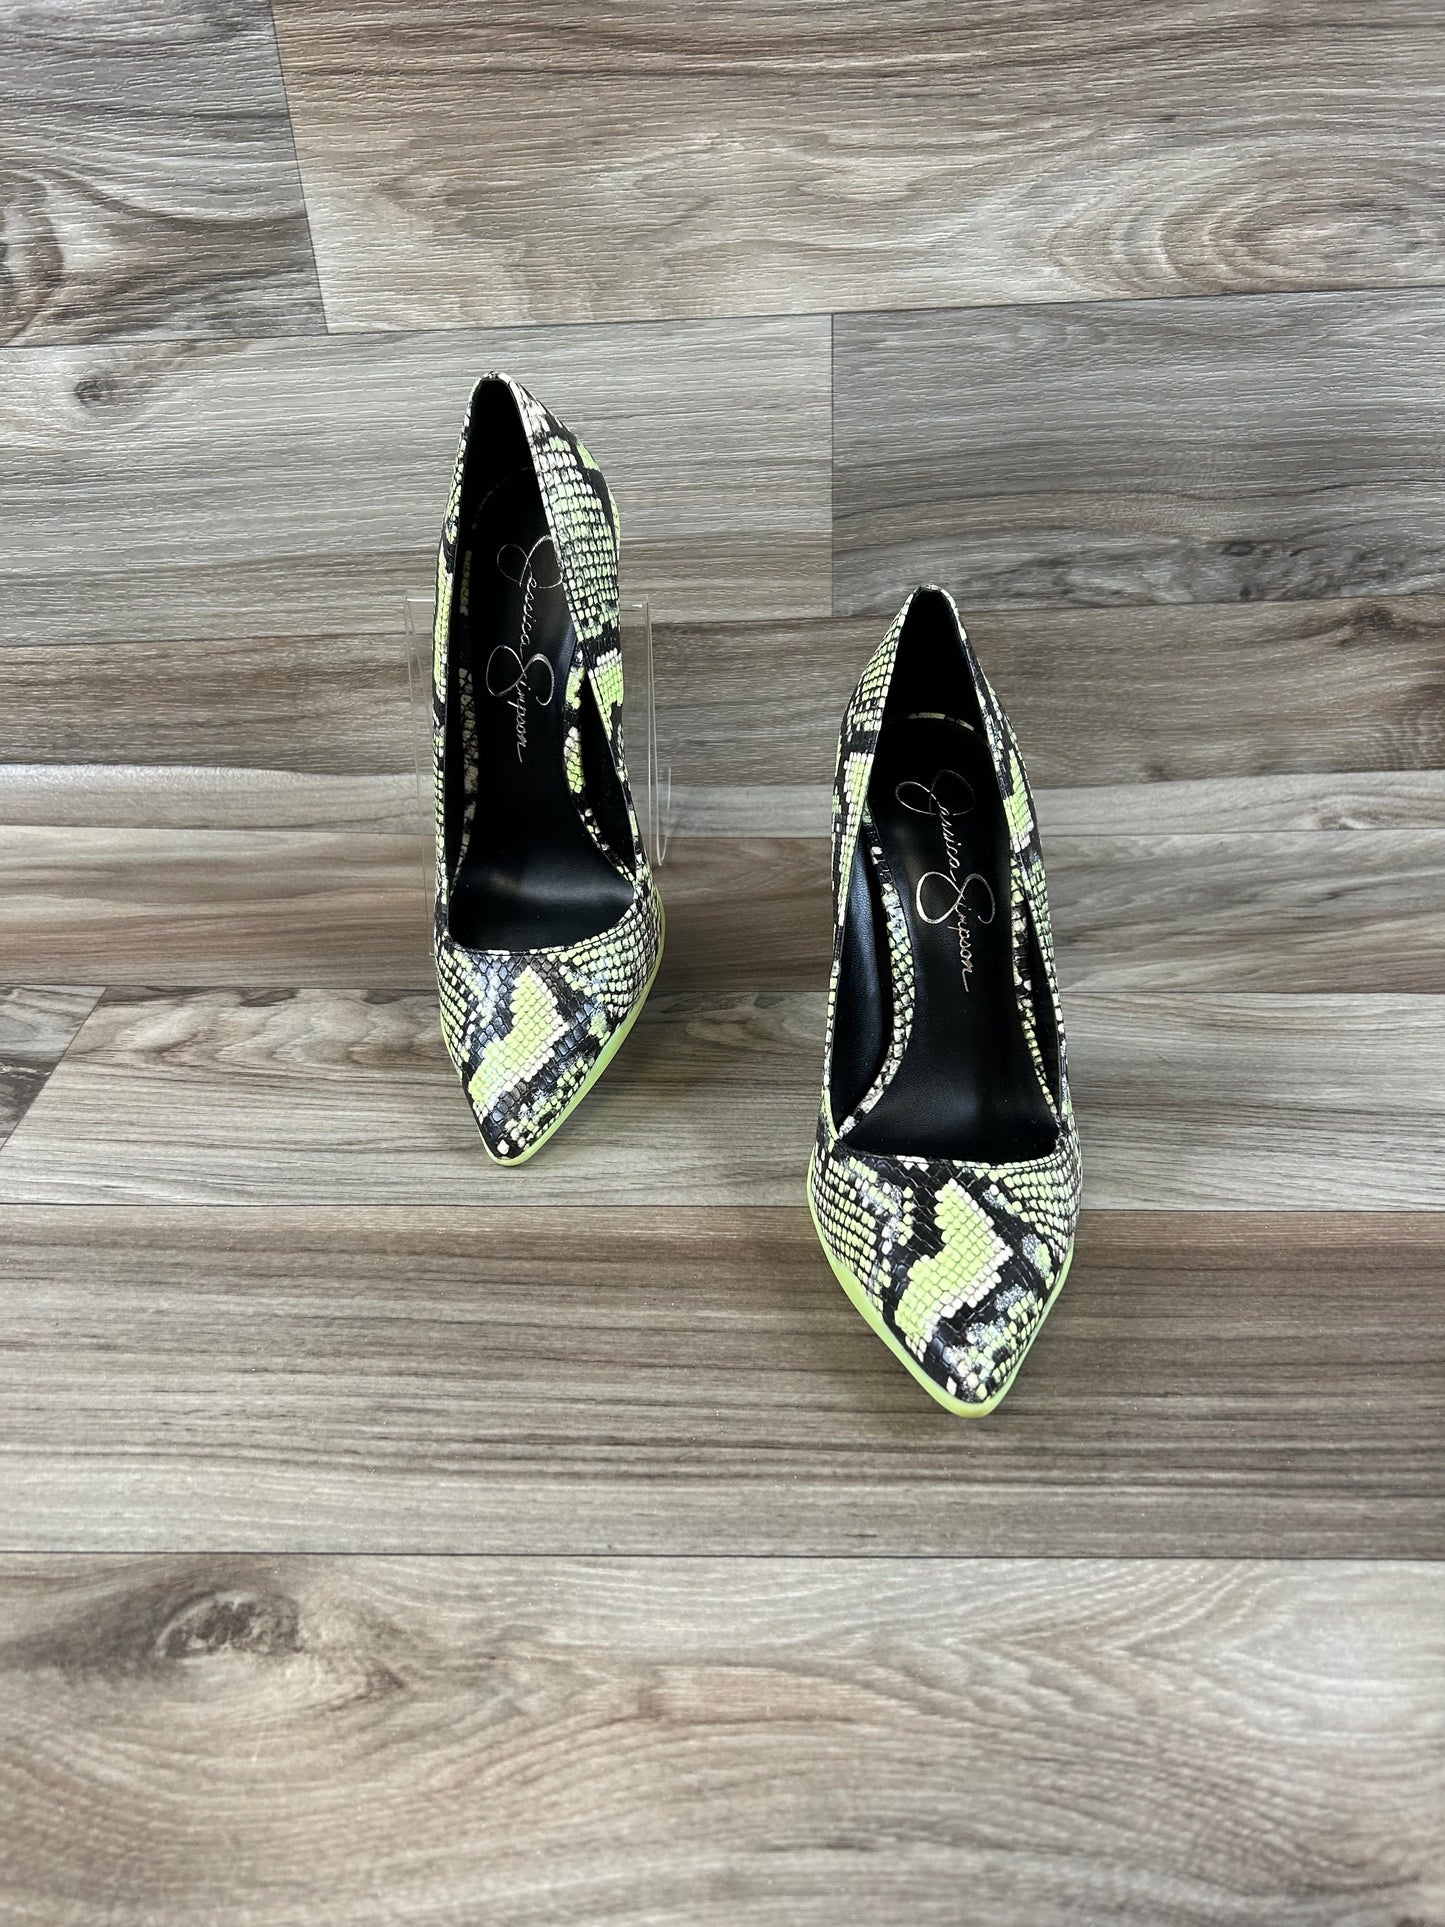 Black & Green Shoes Heels Stiletto Jessica Simpson, Size 7.5